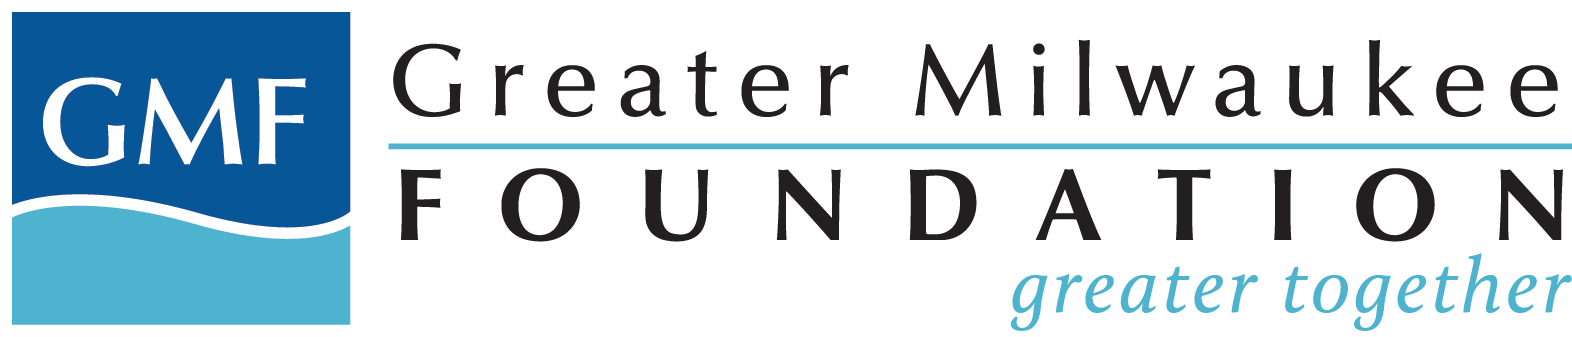 Greater Milwaukee Foundation text logo